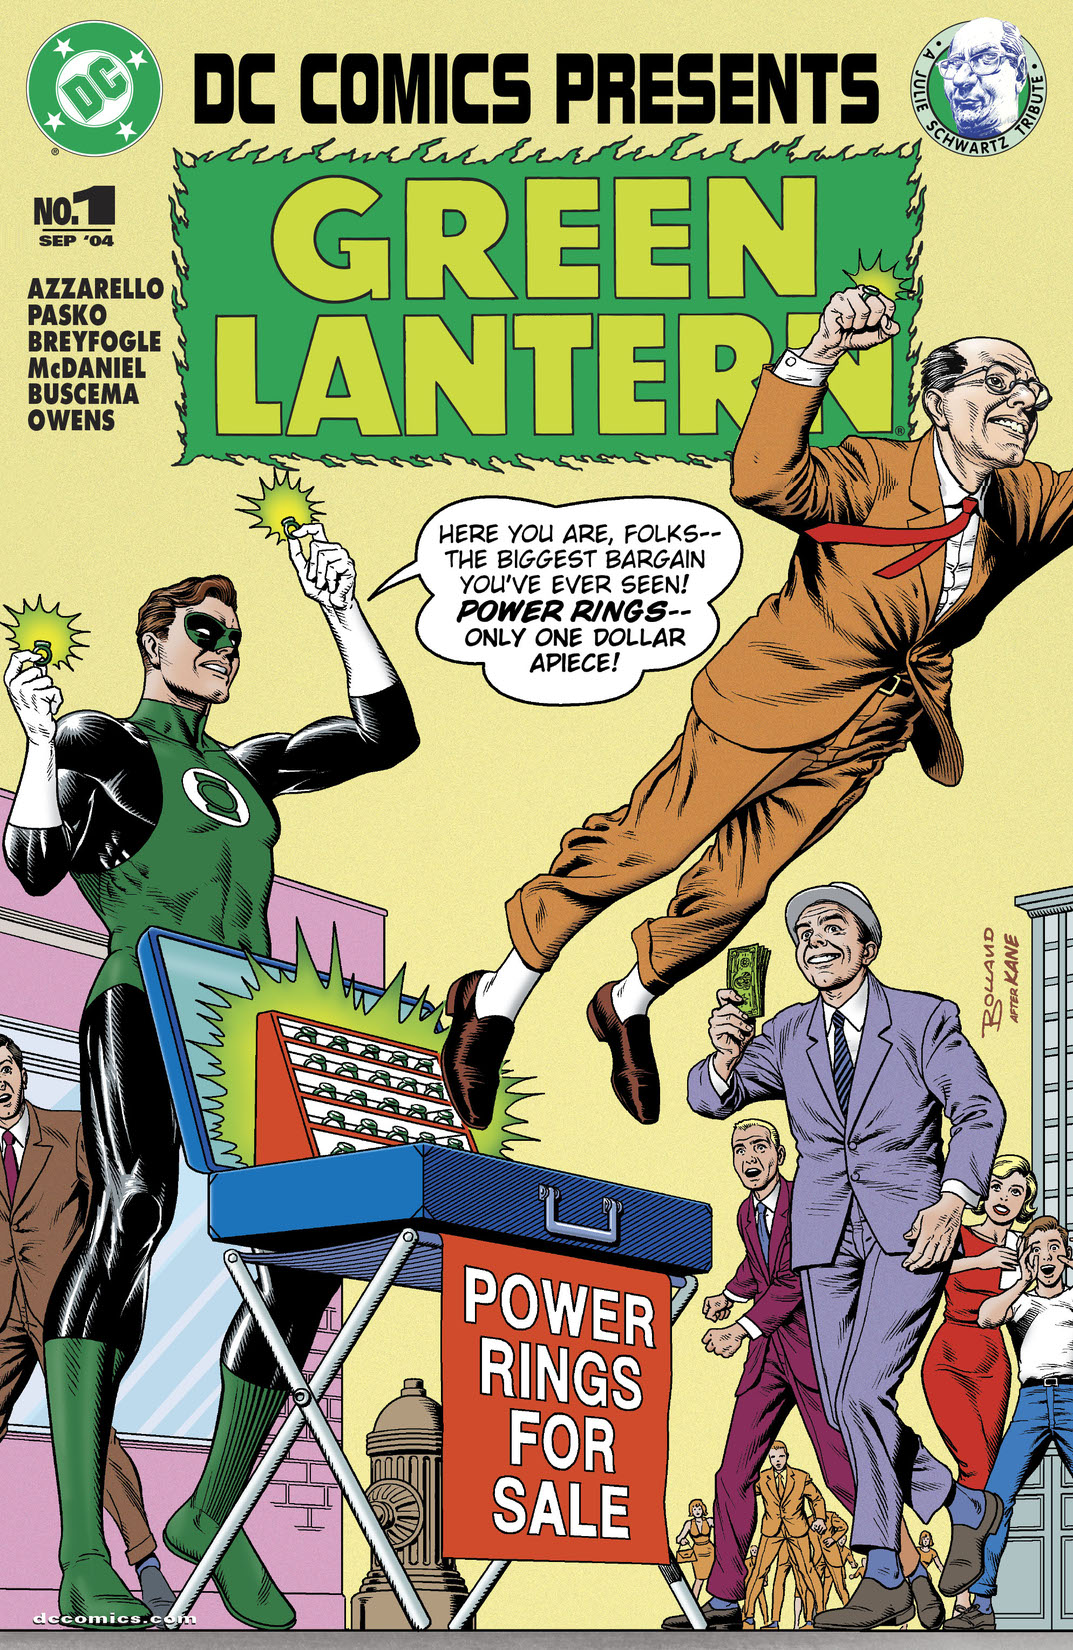 DC Comics Presents Green Lantern (2004-) #1 preview images